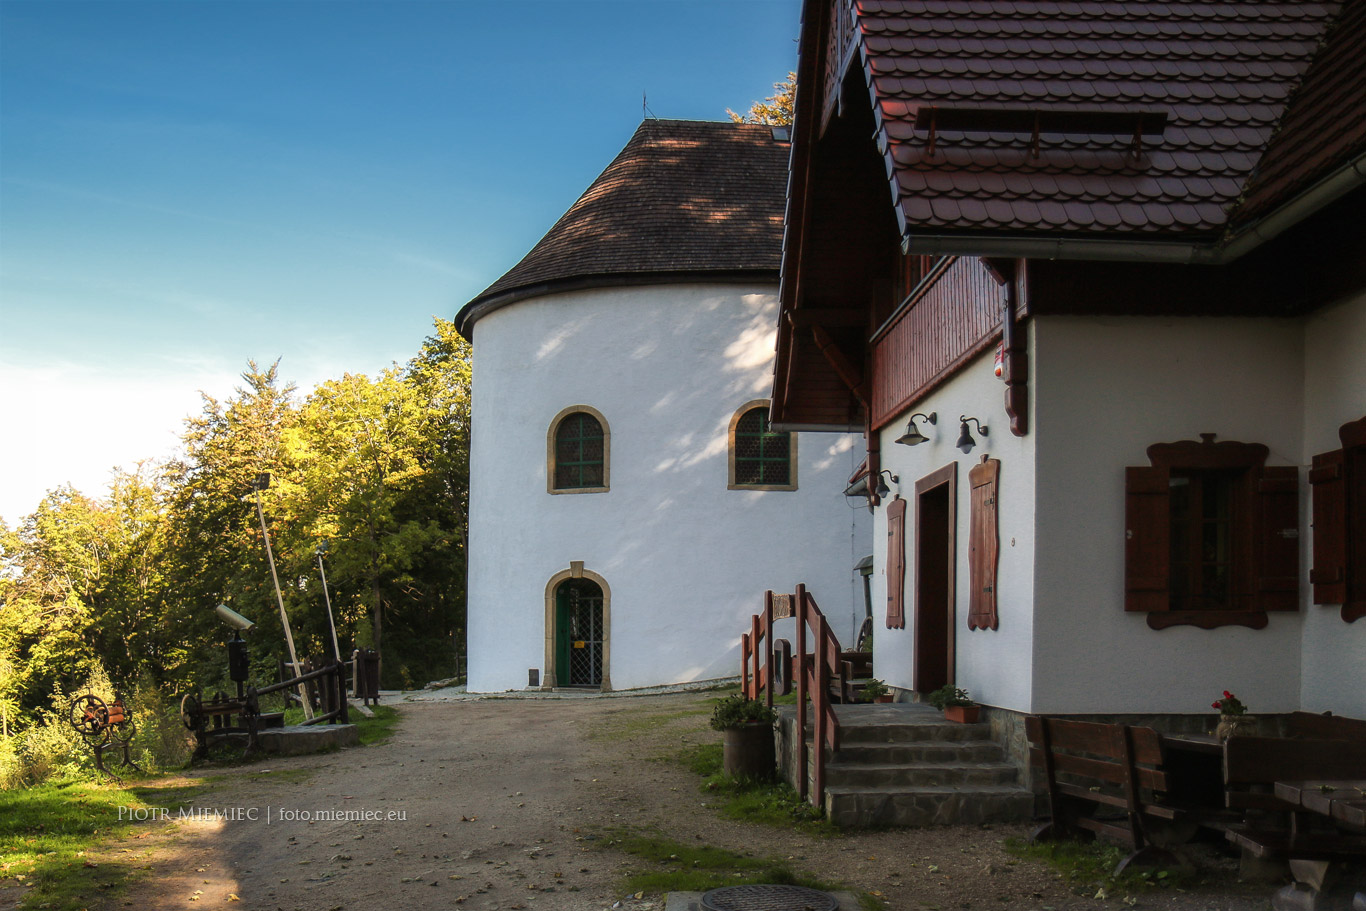 Kaplica pw. św. Anny Karkonosze